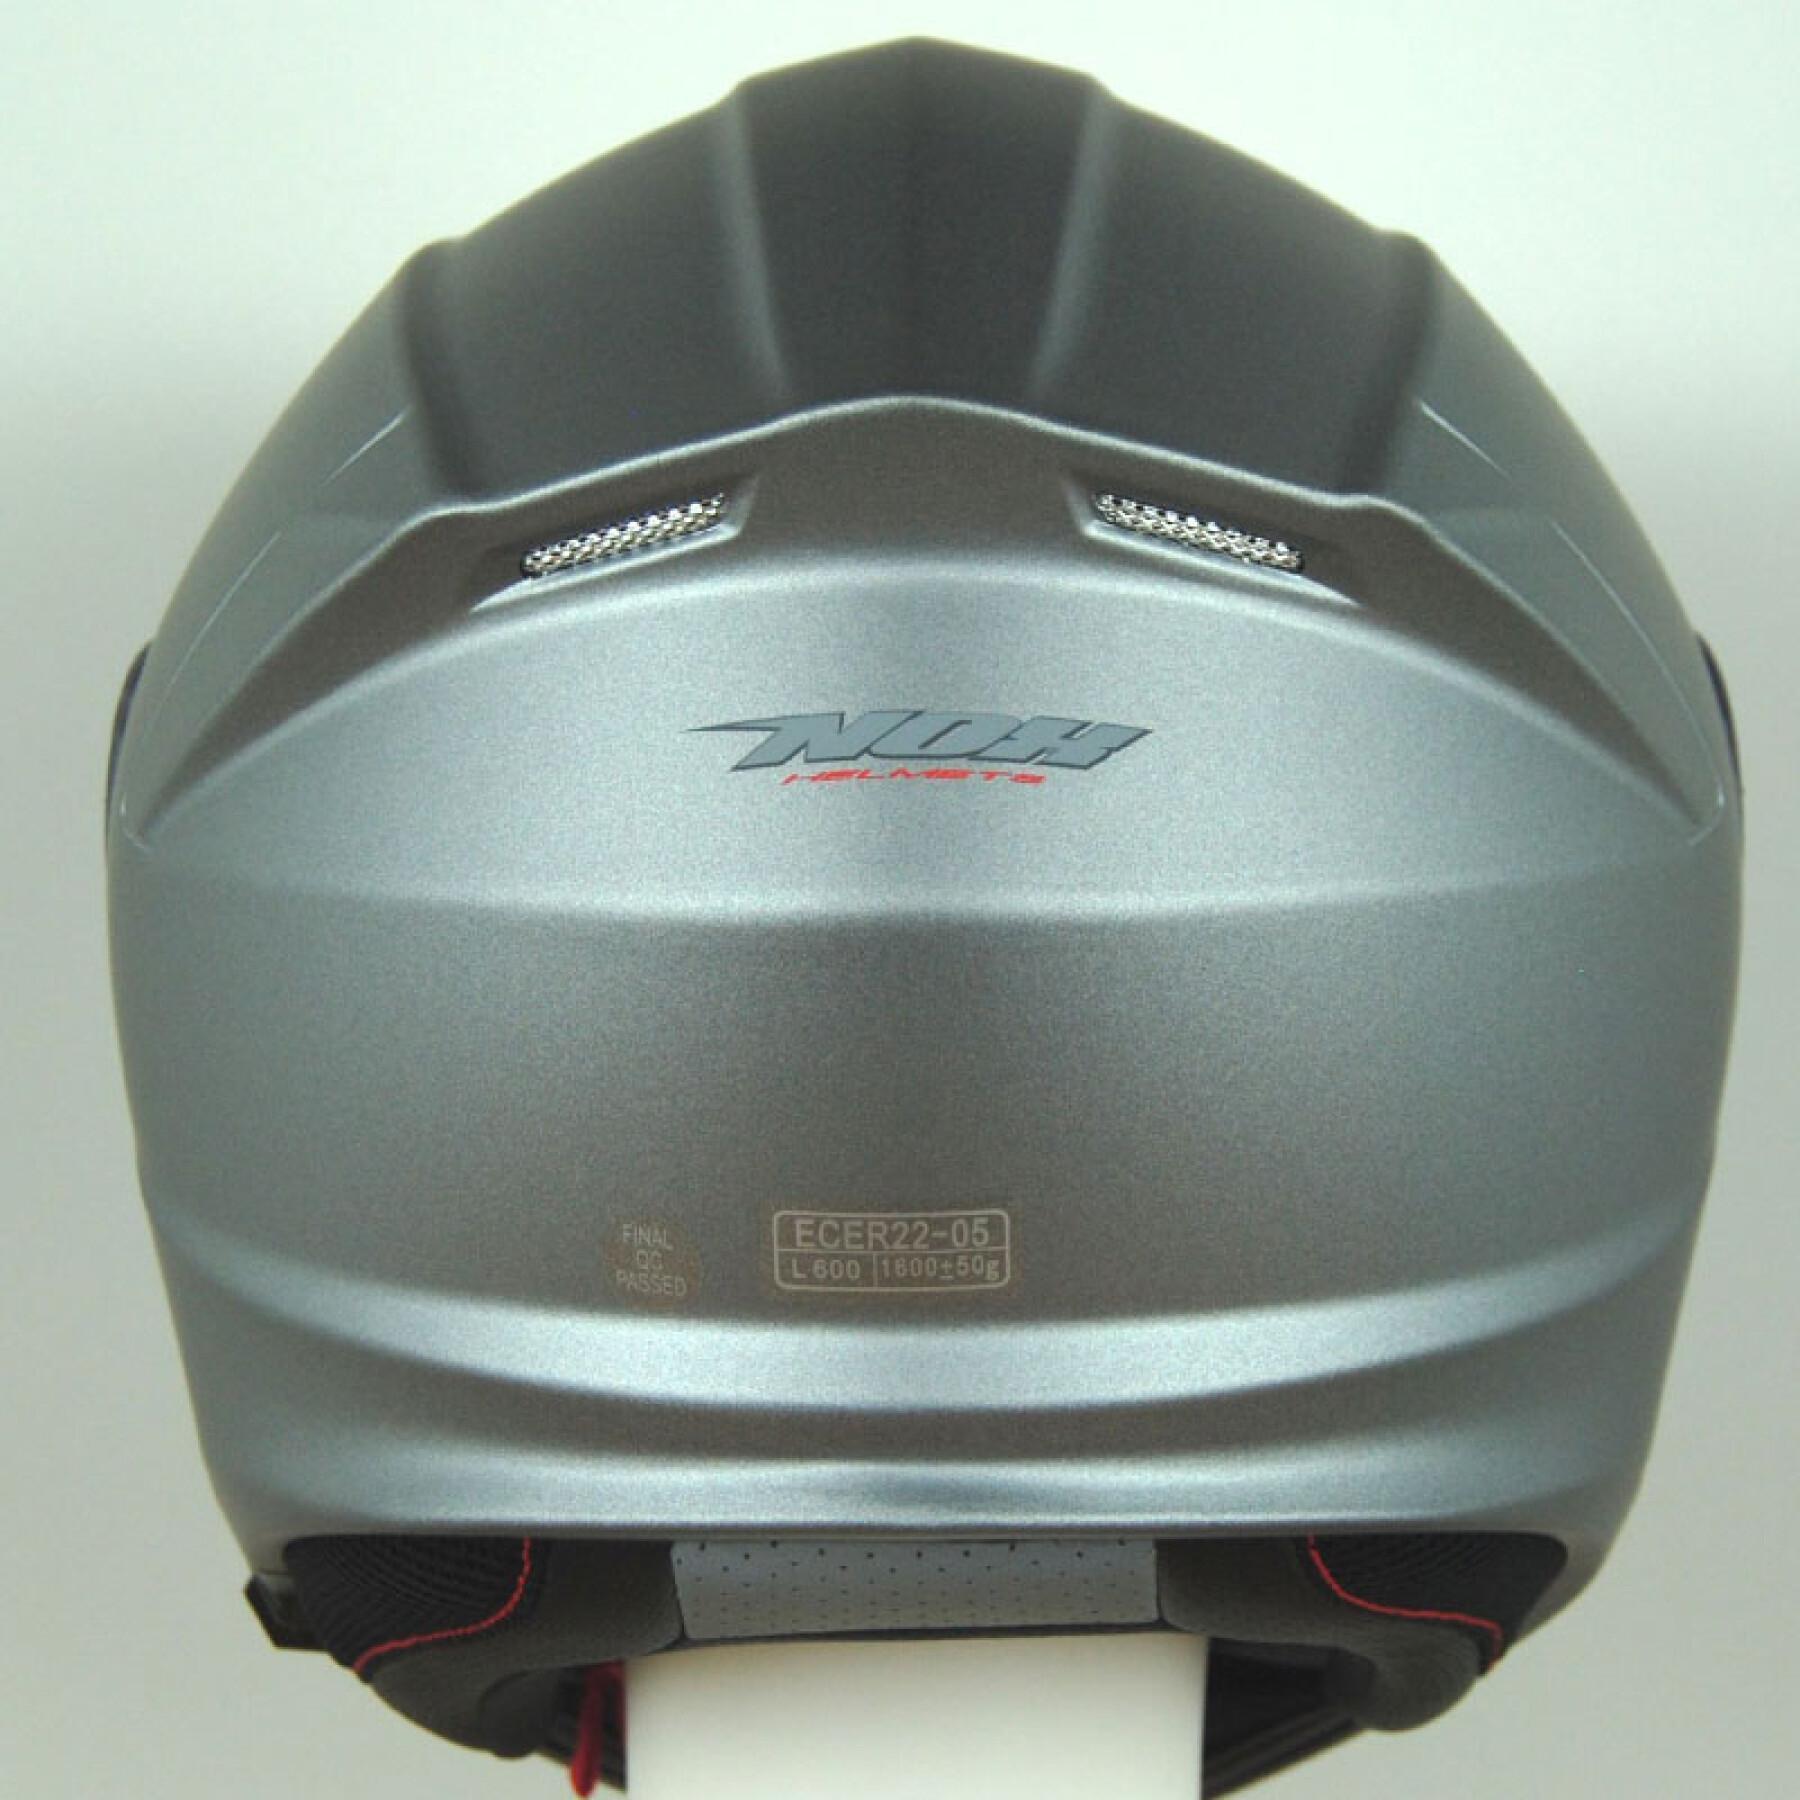 Modulares Intercom-Headset mit Nox N960